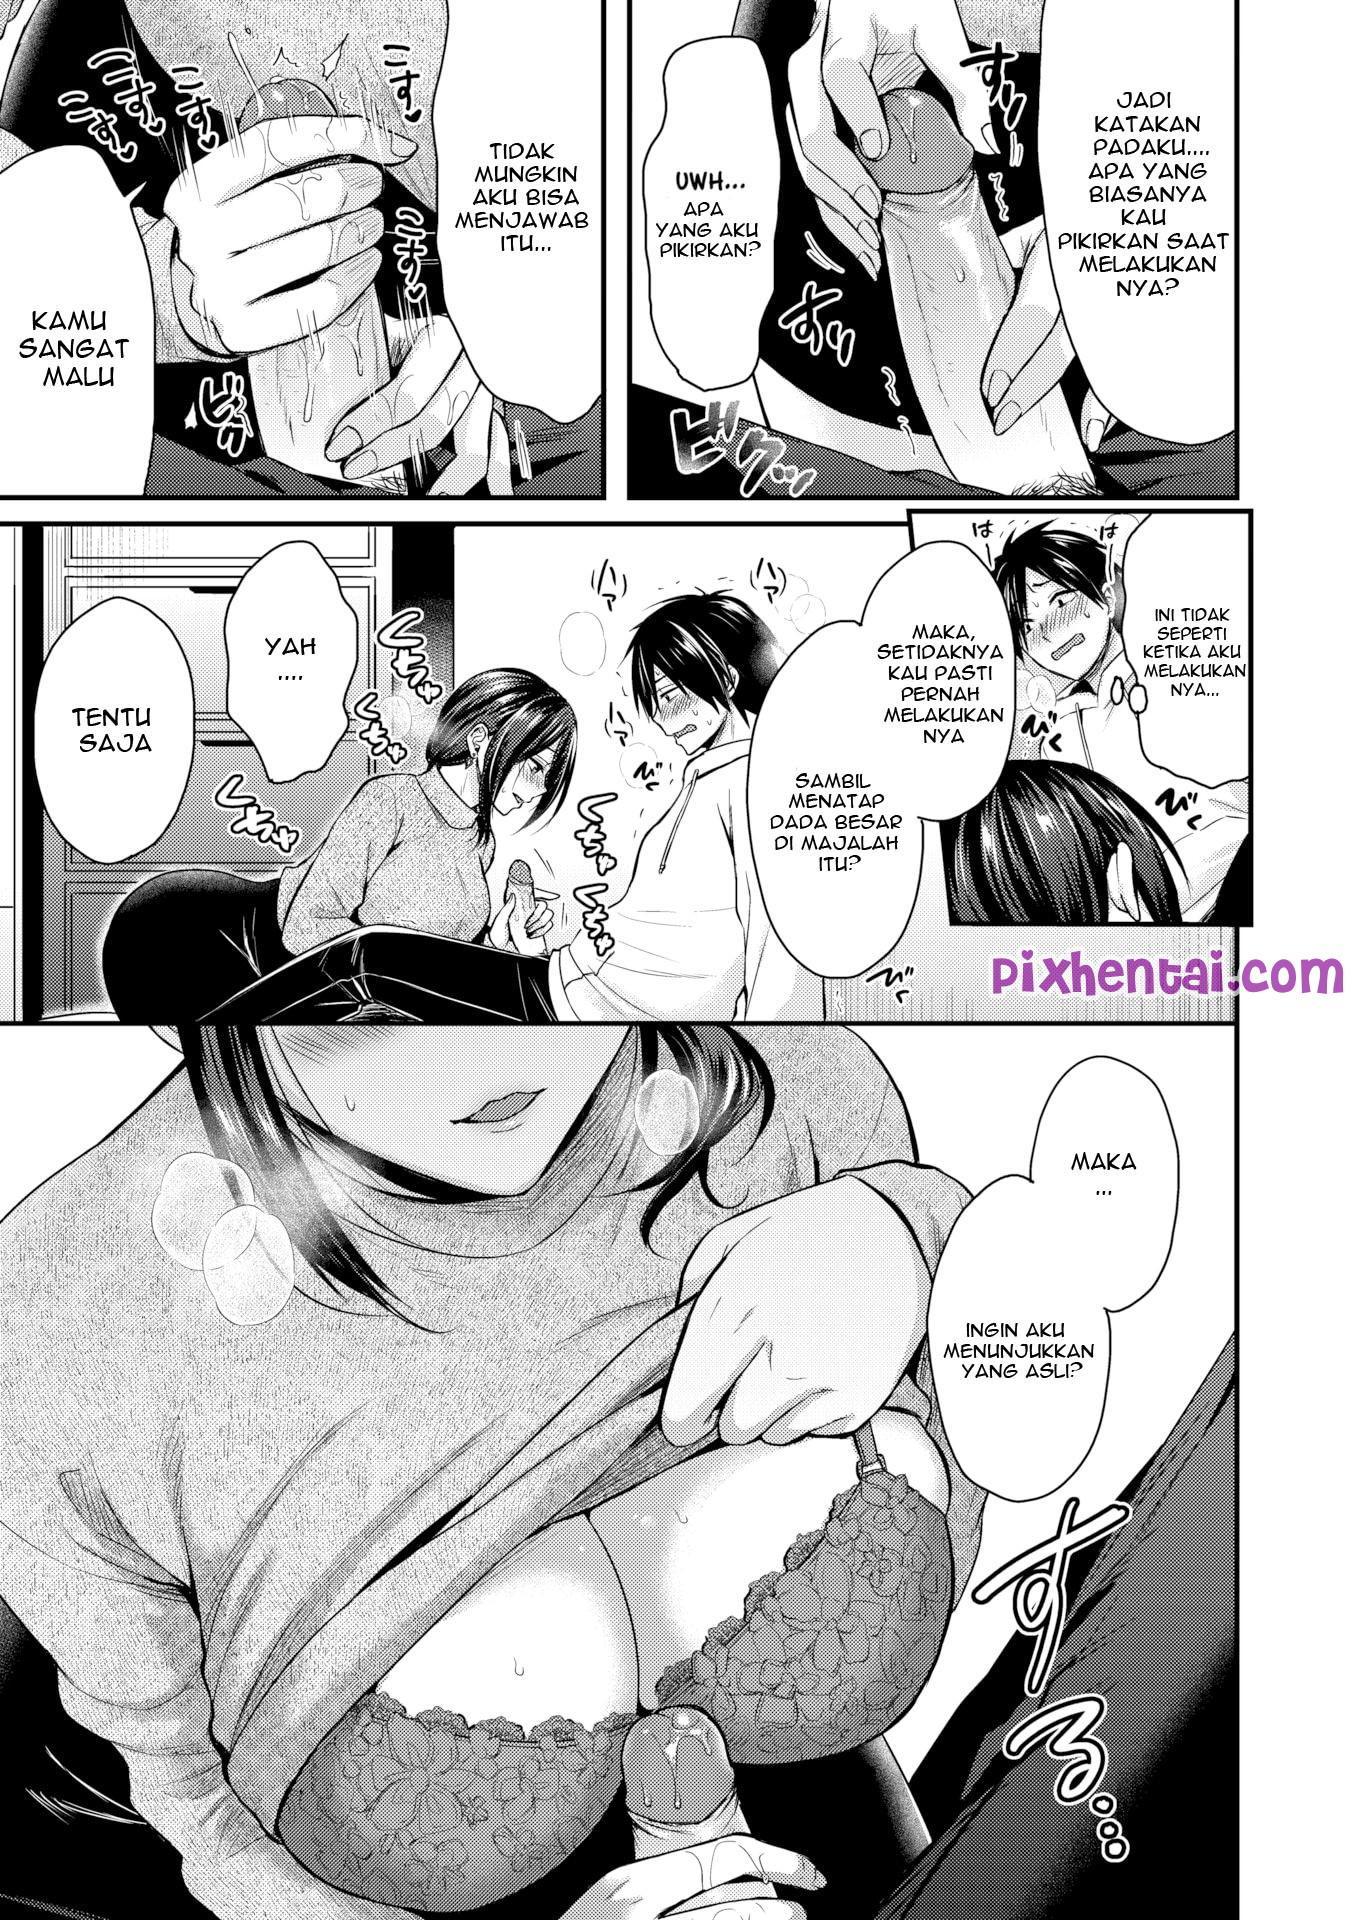 Komik hentai xxx manga sex bokep janda dientot saat menginap di rumah tetangga 09